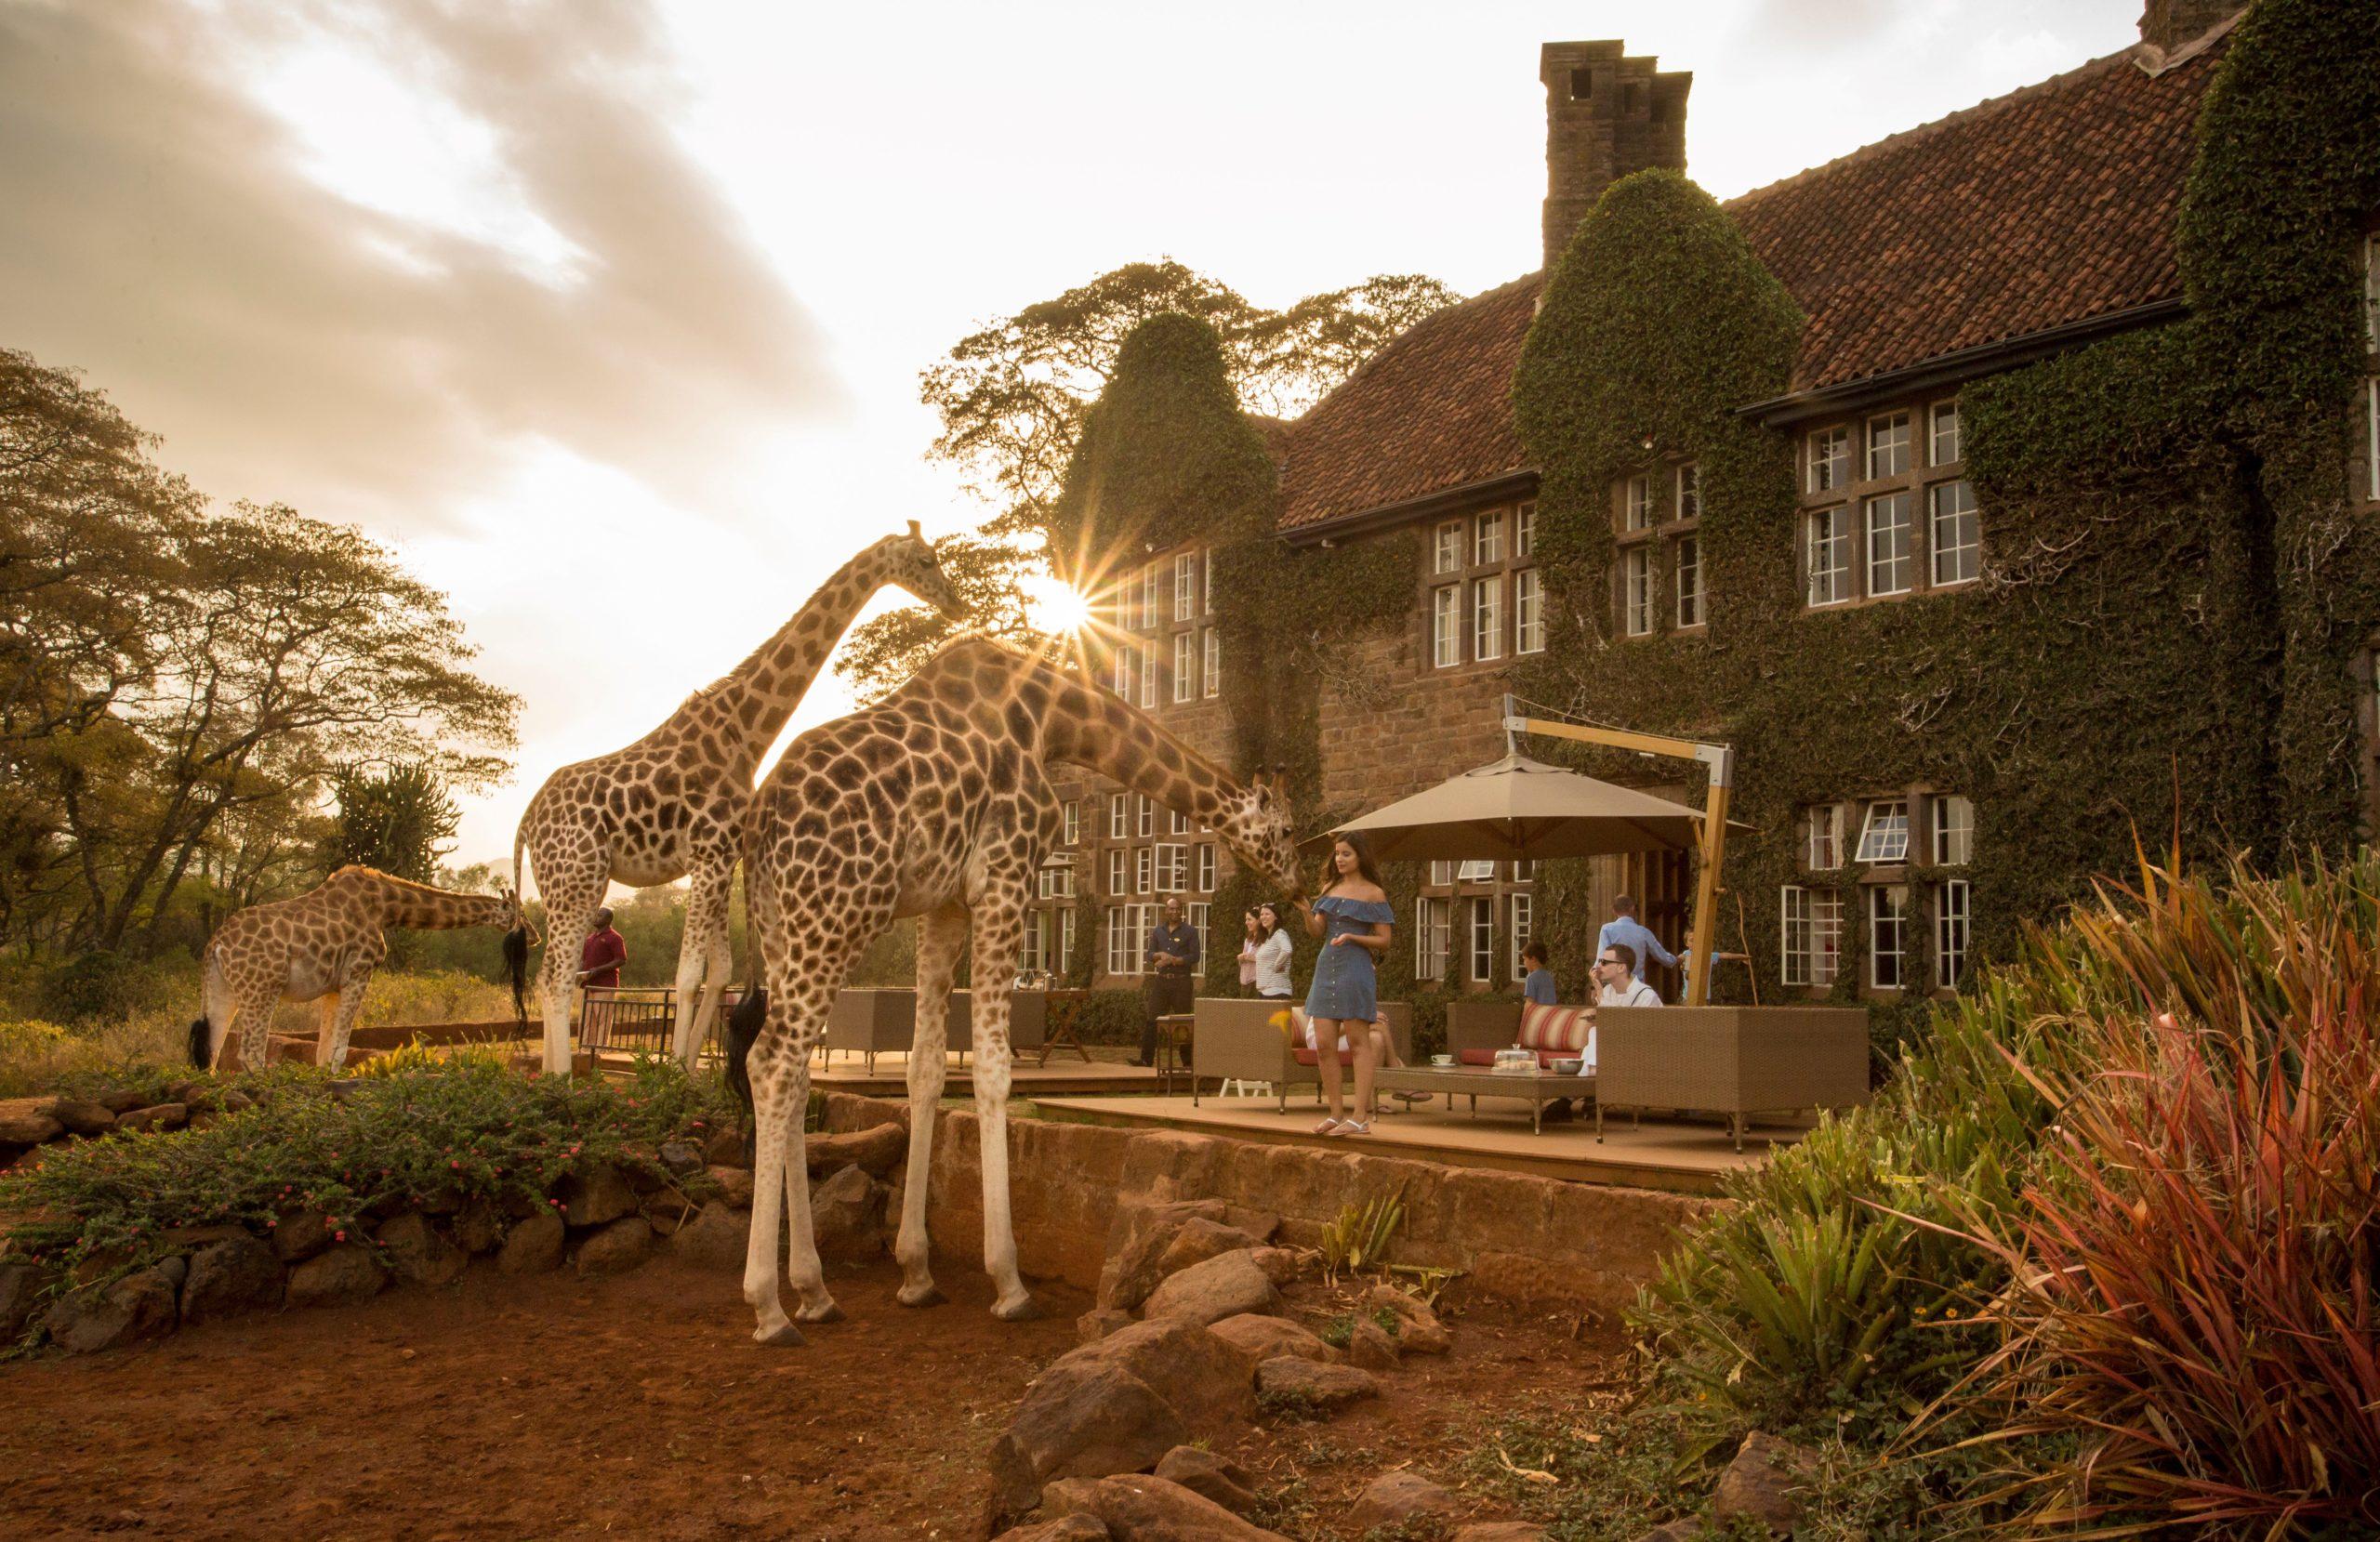 1 Night Of Wonder - Discovering The Magic Of Giraffe Manor